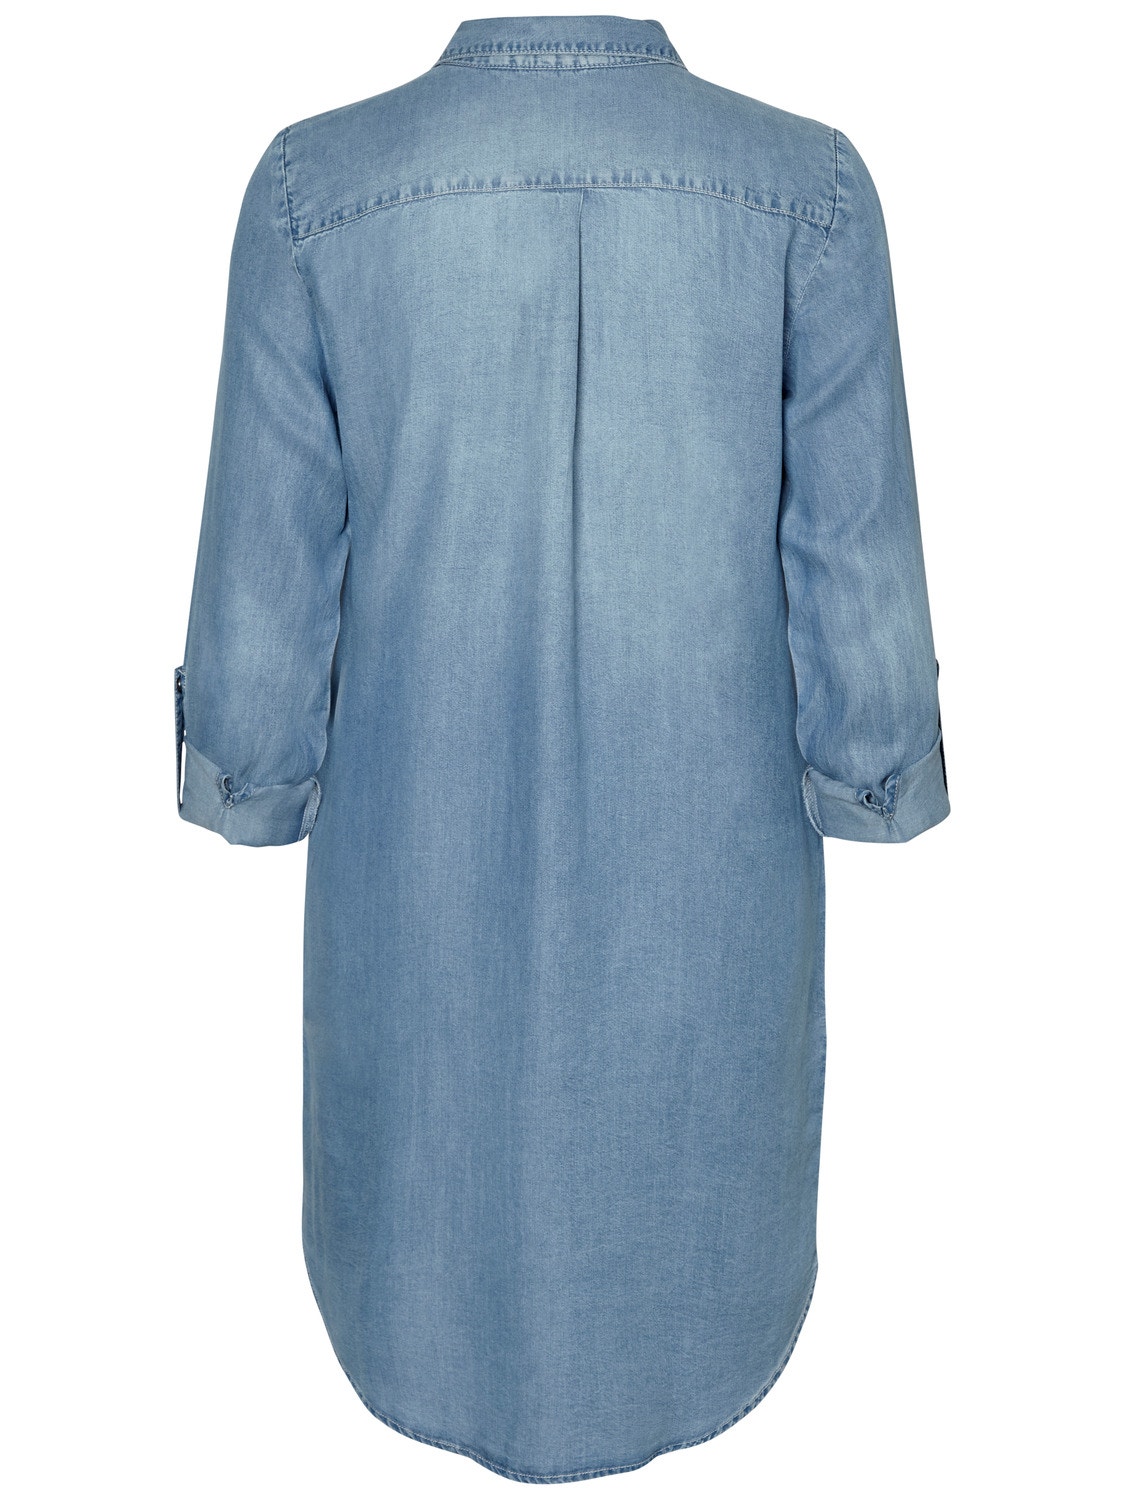 Vero Moda VMSILLA Kurzes Kleid -Light Blue Denim - 10184172